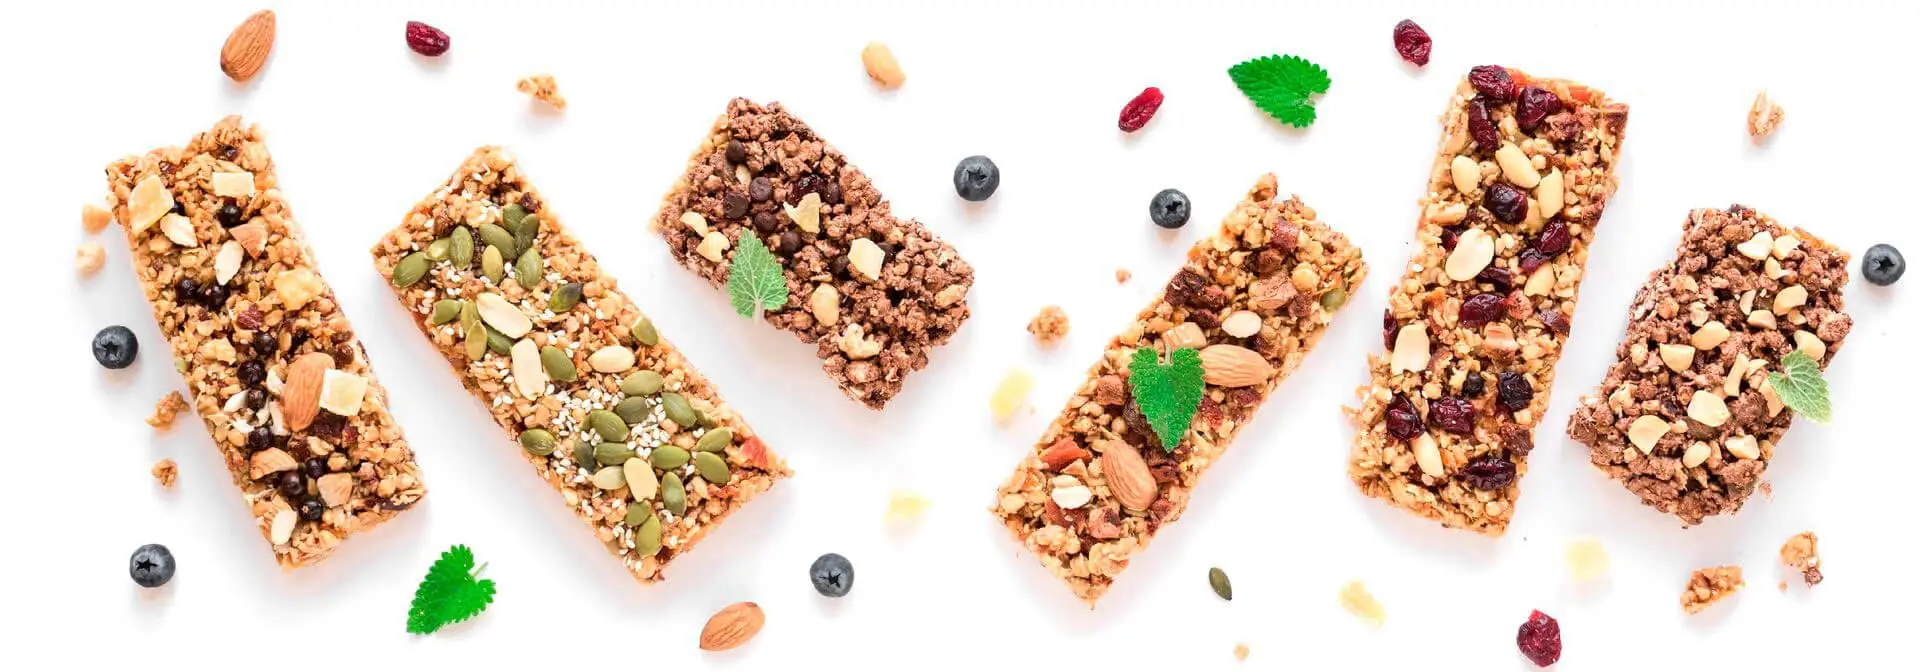 Homemade healthy snack-granola vegan protein bars